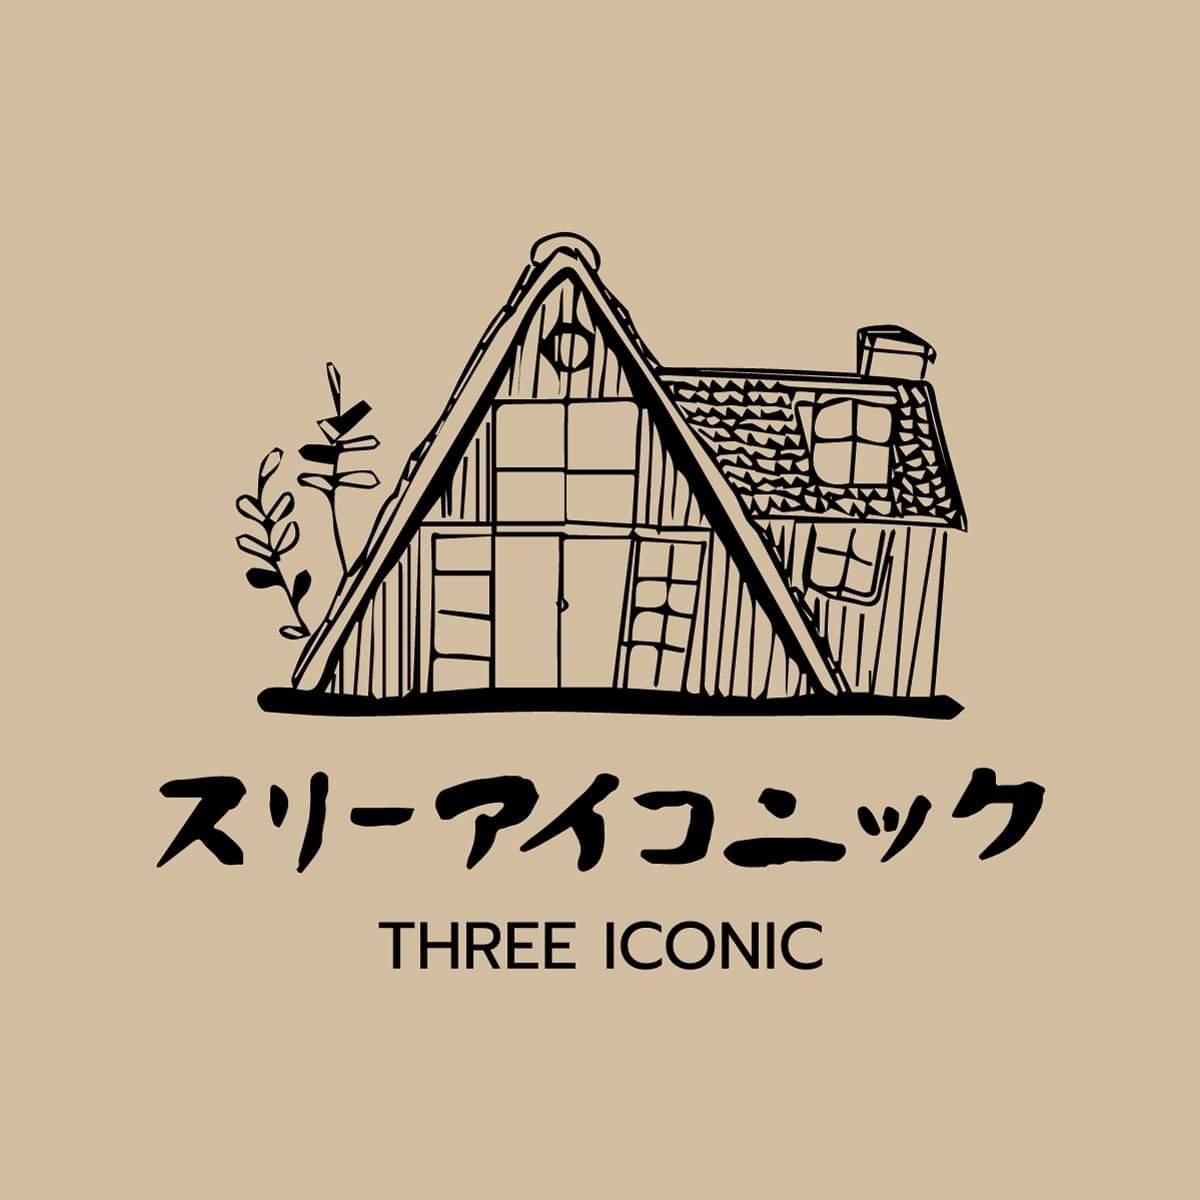 Three Iconic